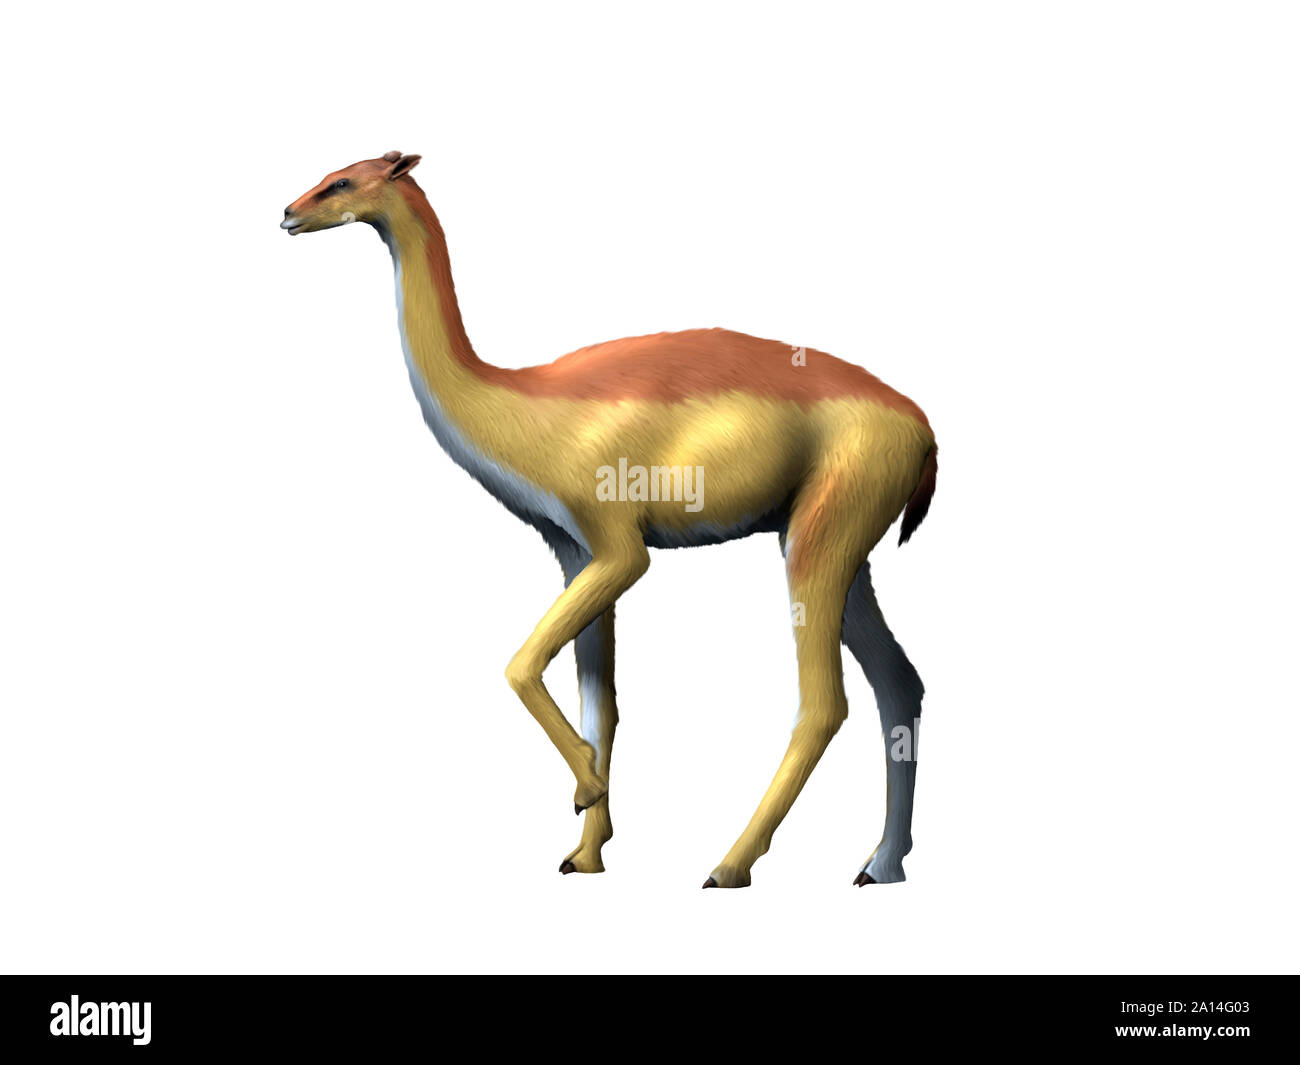 Aepycamelus giraffinus, camel, Miocene of Colorado. Stock Photo